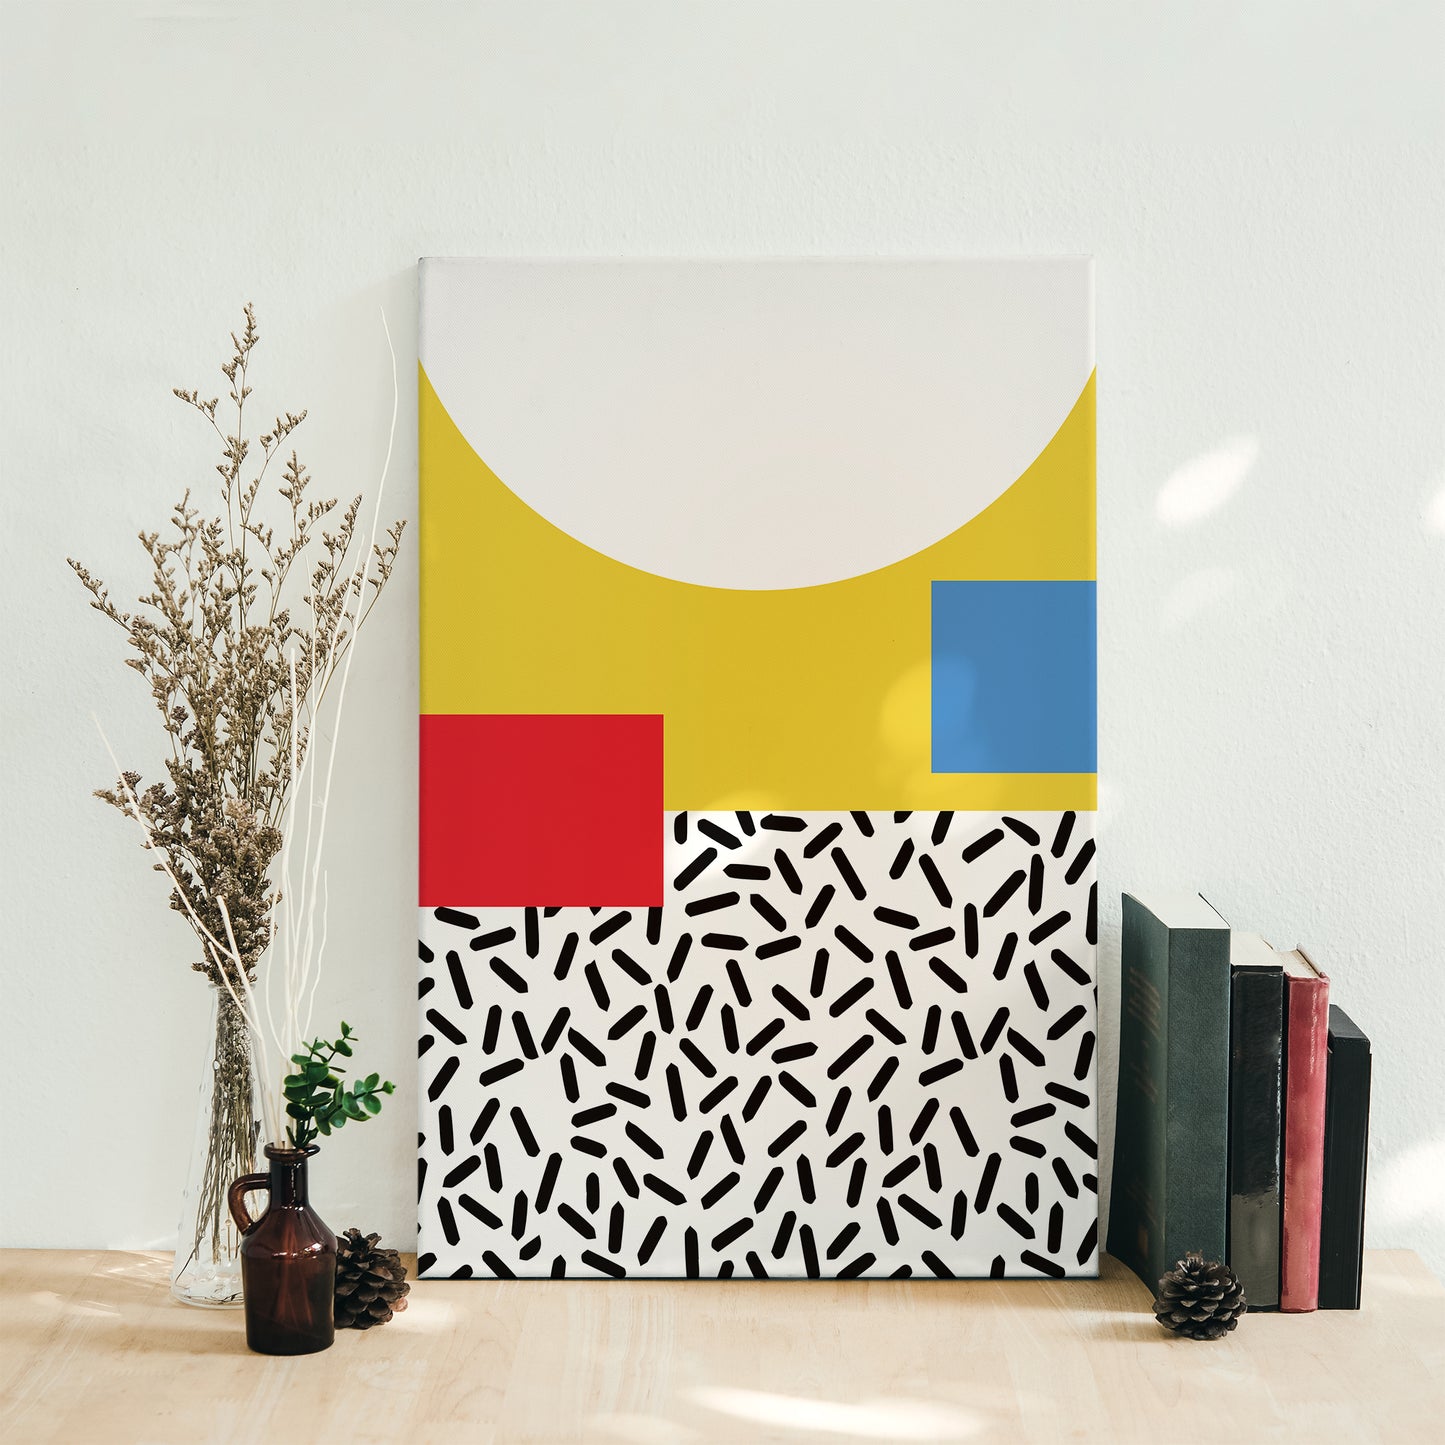 Minimalist Bauhaus Canvas Print